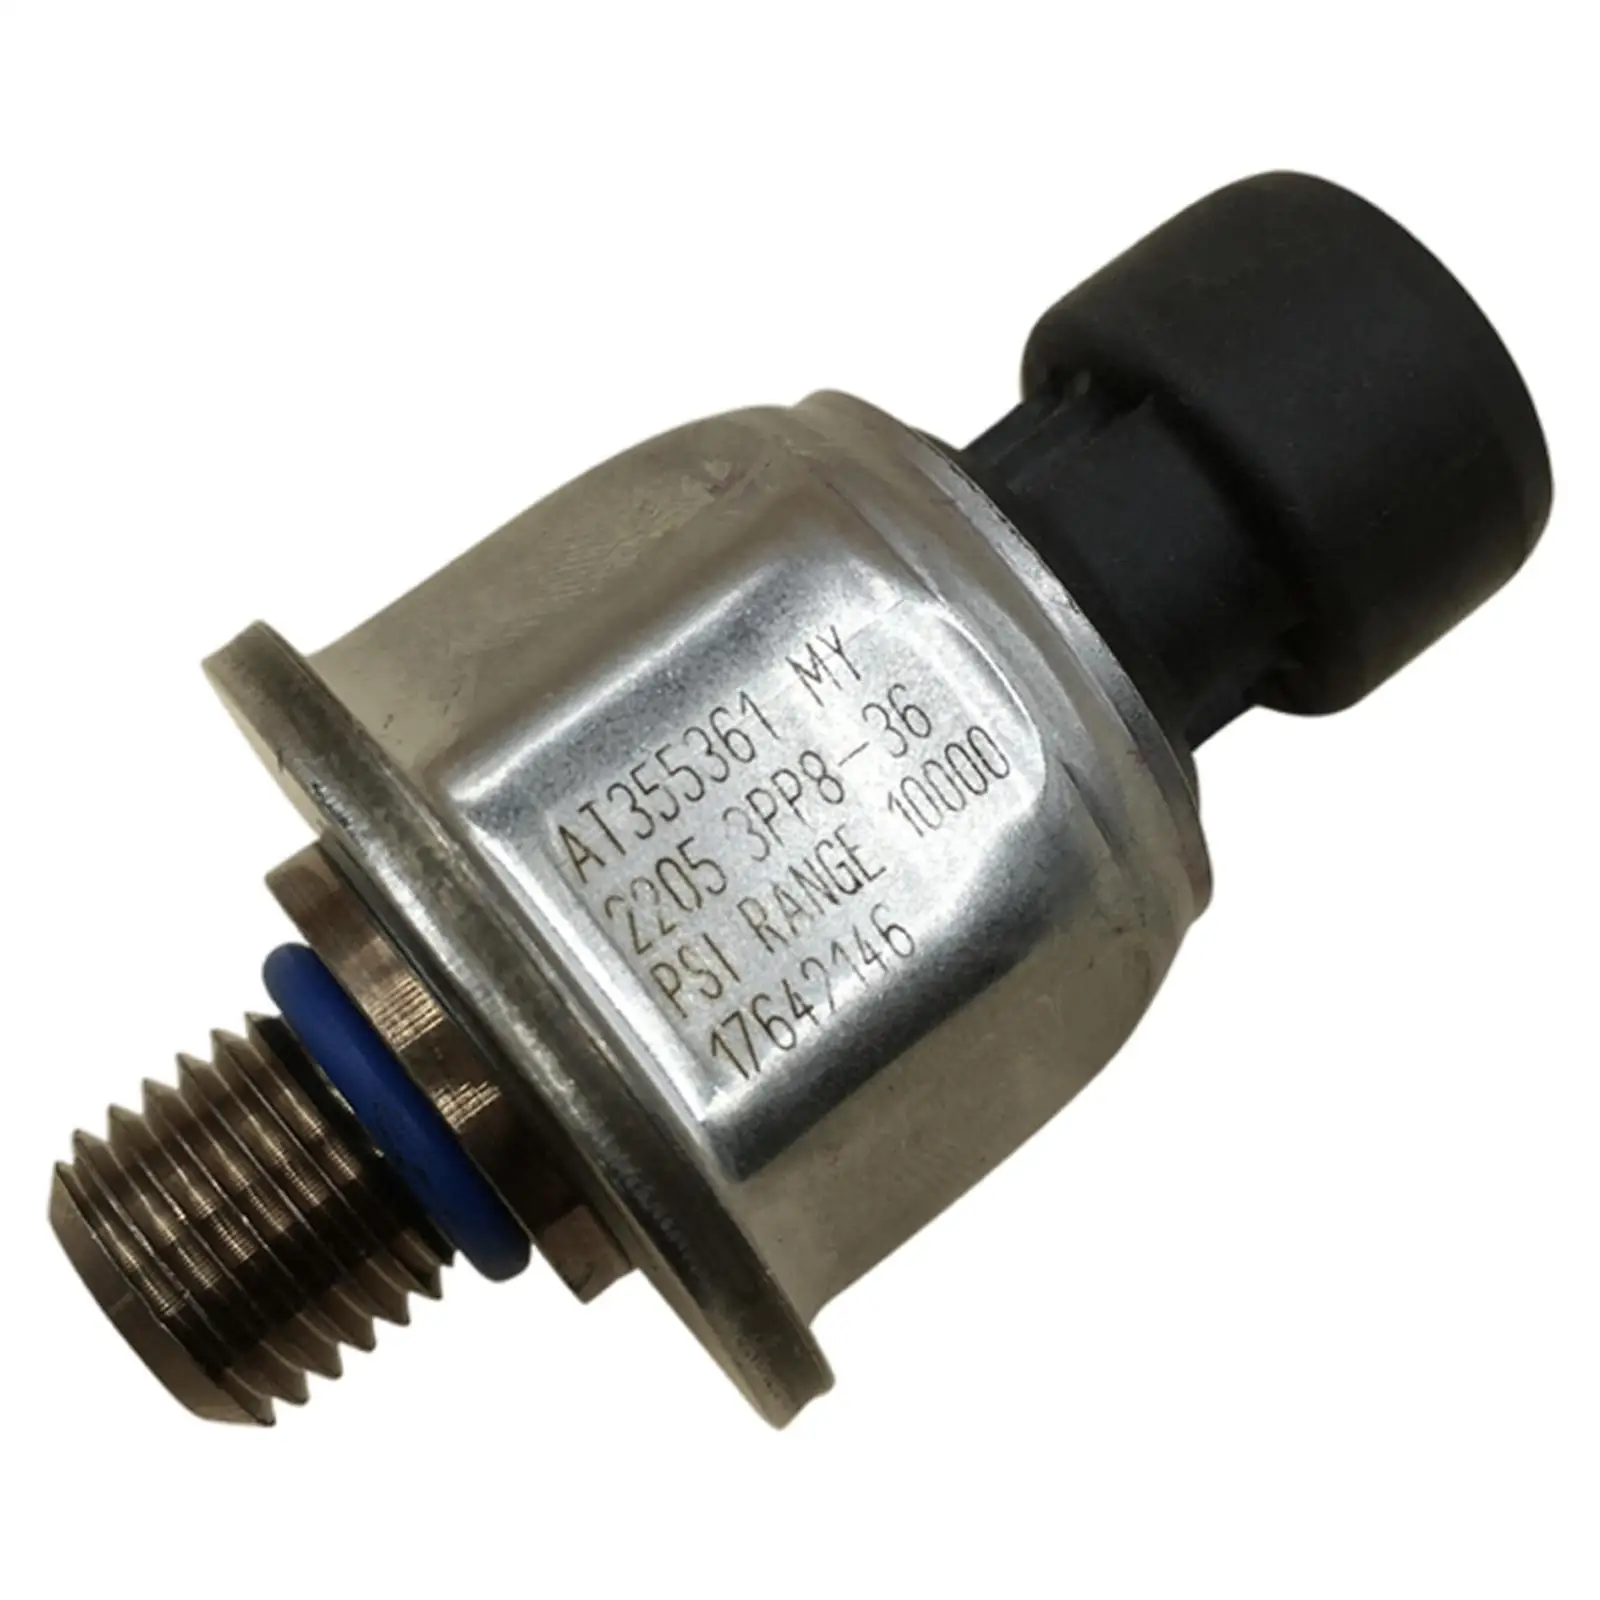 

Fuel Oil Pressure Sensor Pressure Sensor Valve Fit for Sensata Replace 3PP8-36 Accessories Parts